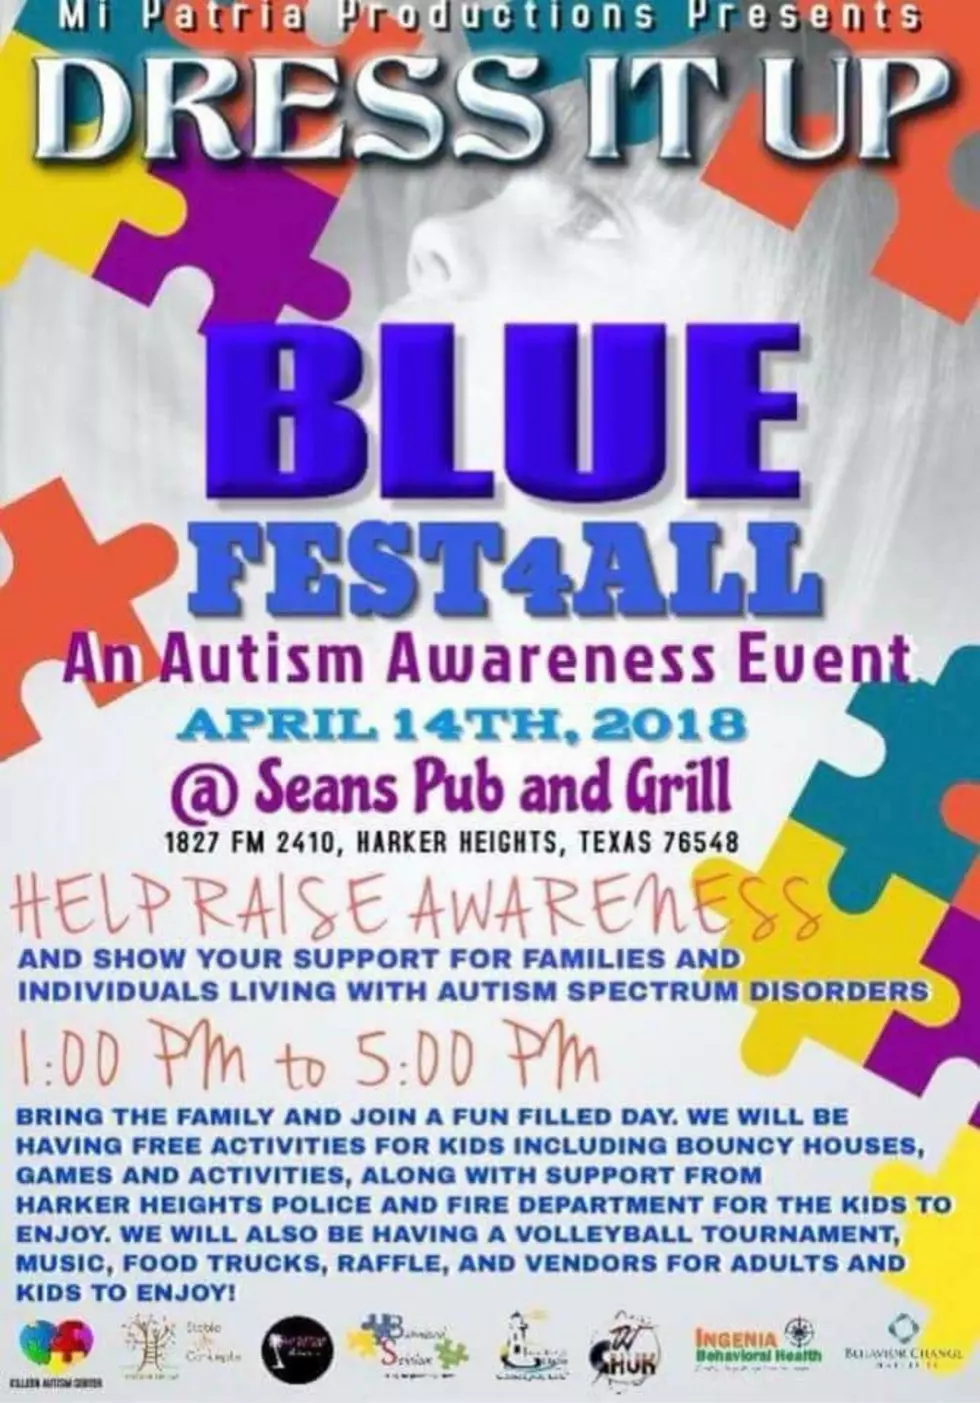 Dress It Up- &#8220;Blue Fest 4 All&#8221; Autism Awareness